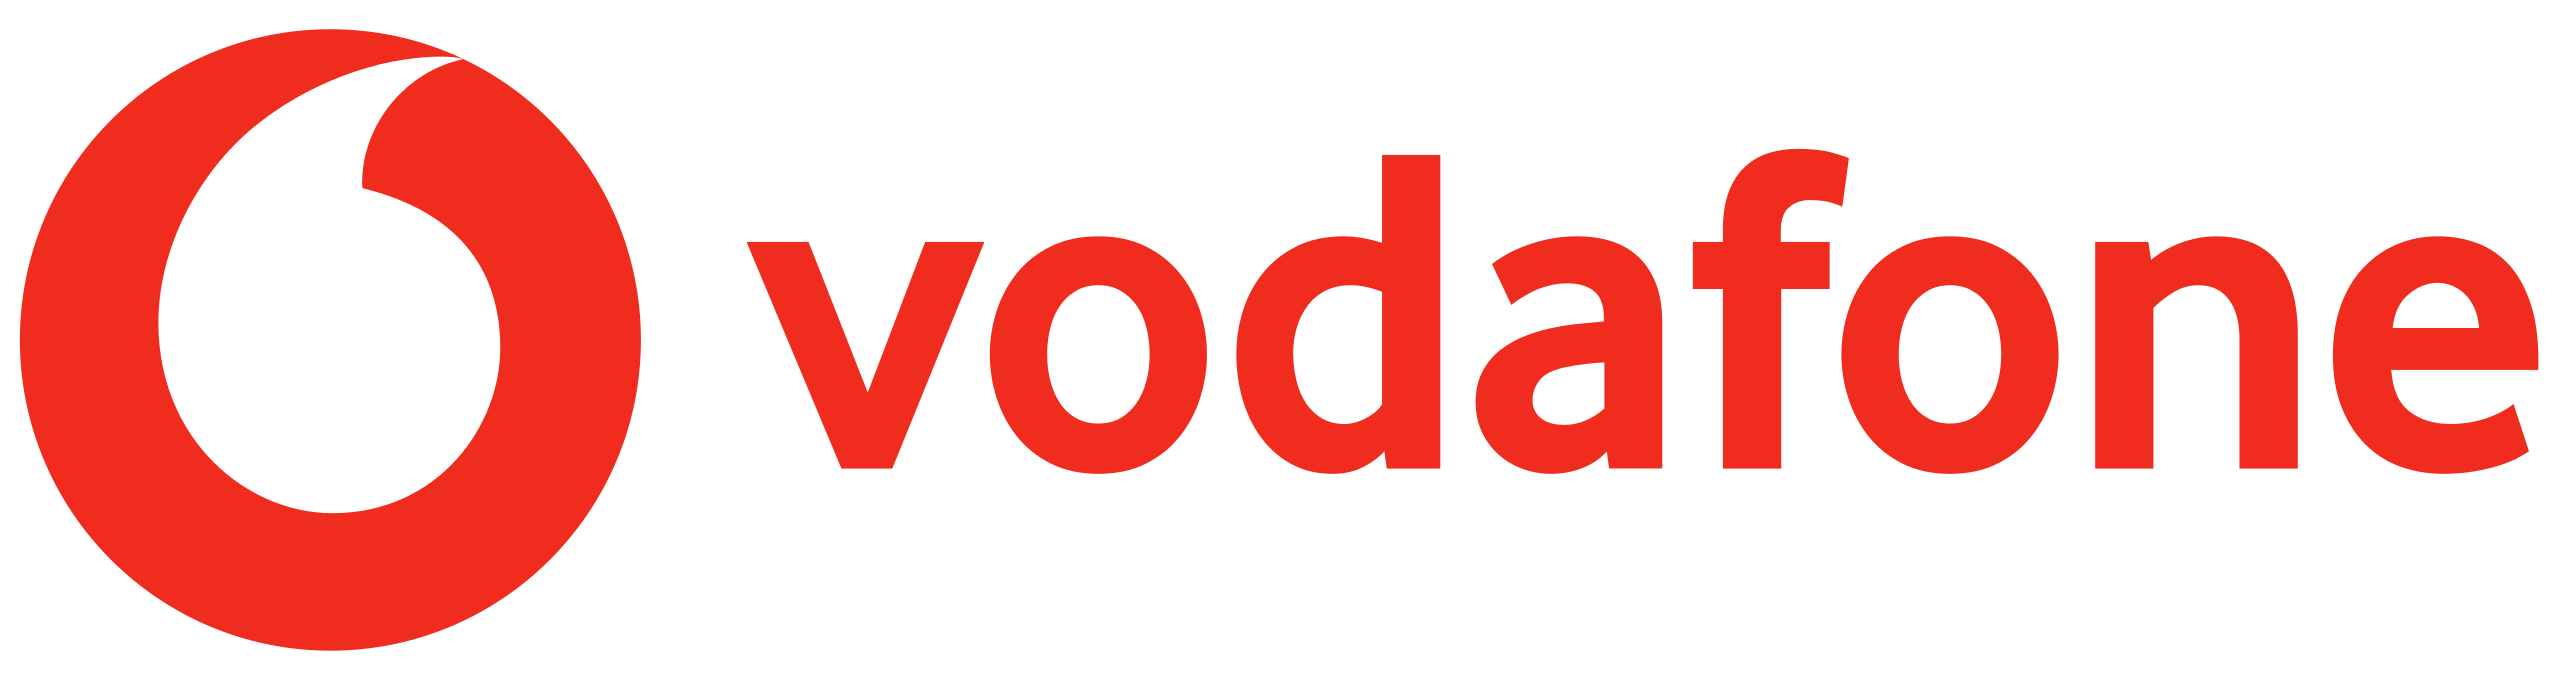 Vodafone Shop Monheim